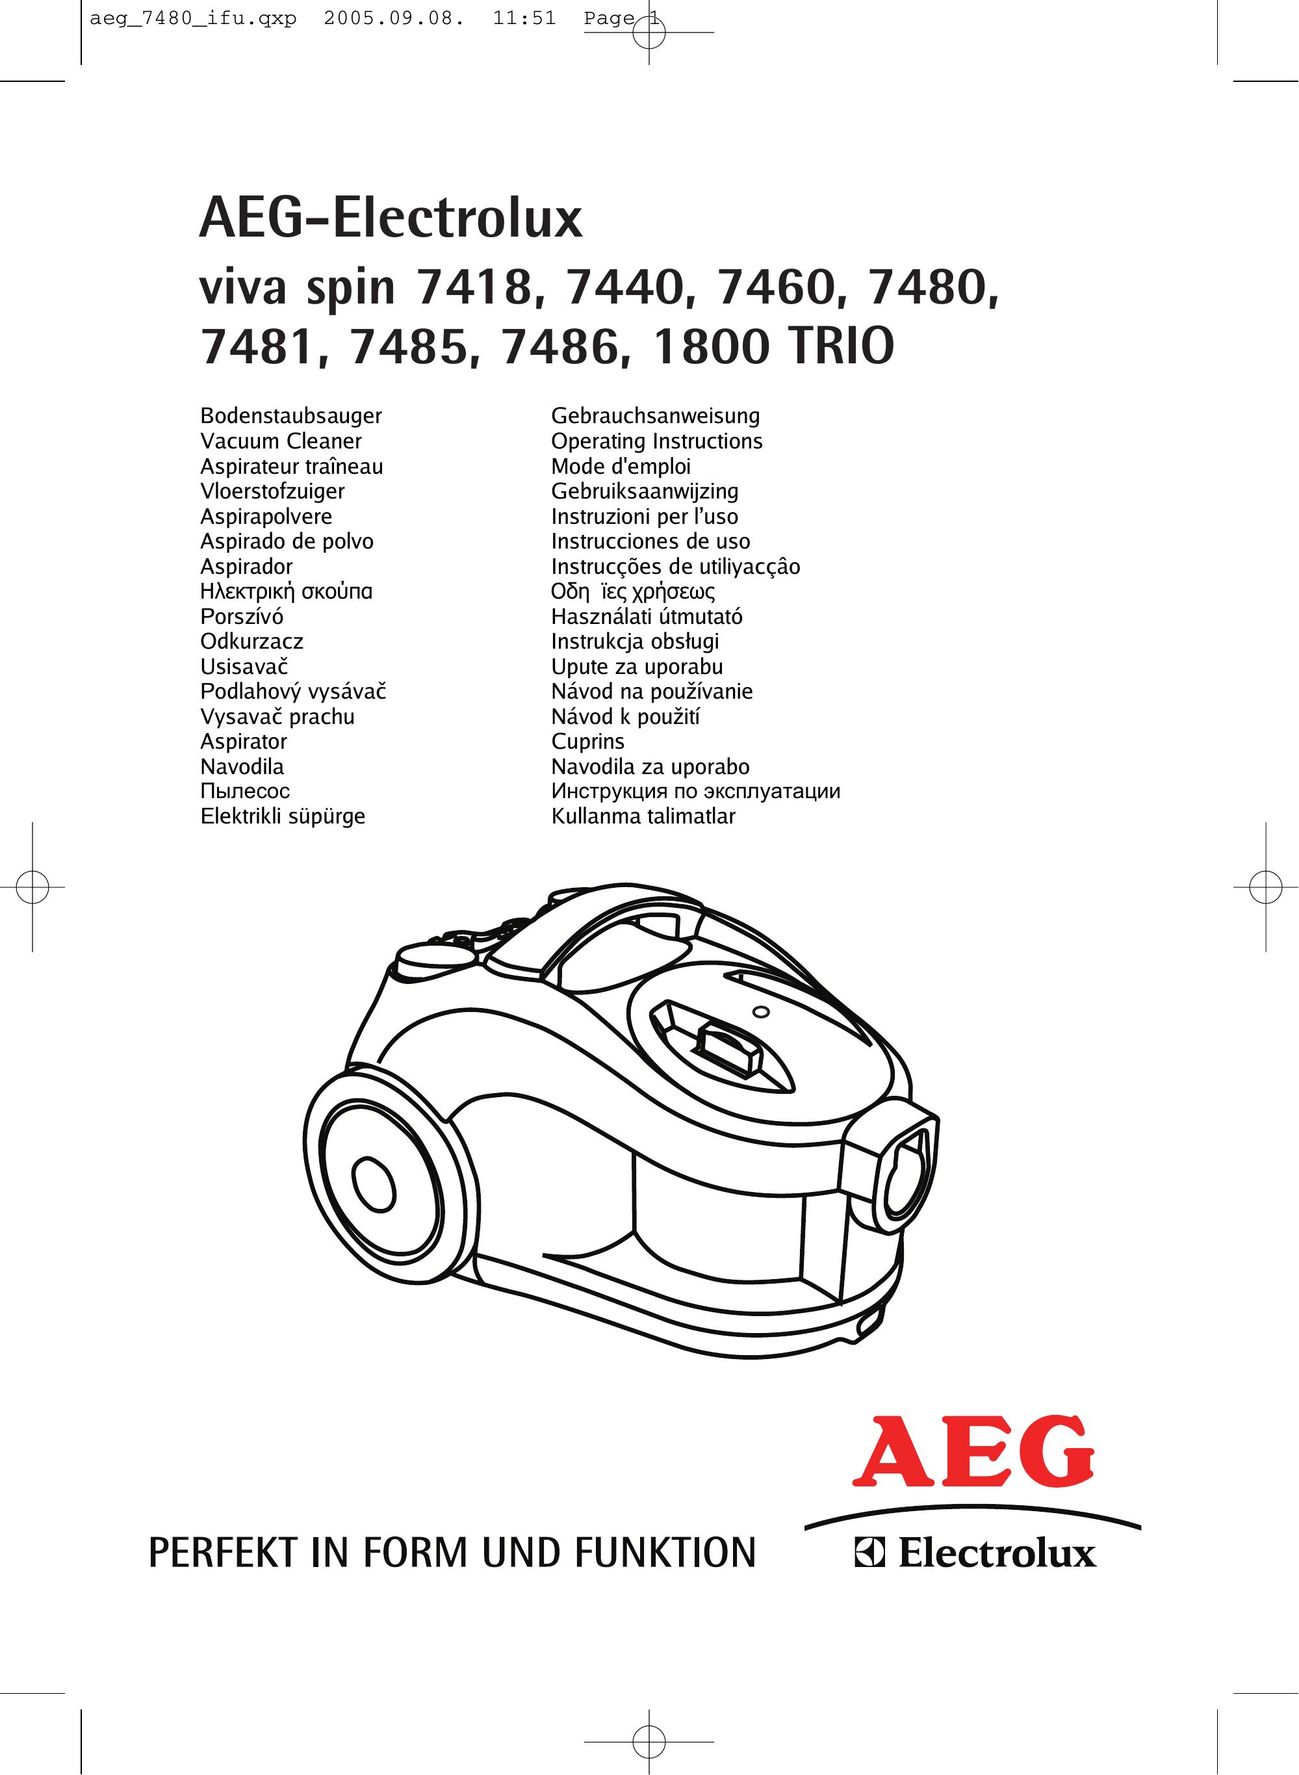 AEG 7485 Vacuum Cleaner User Manual